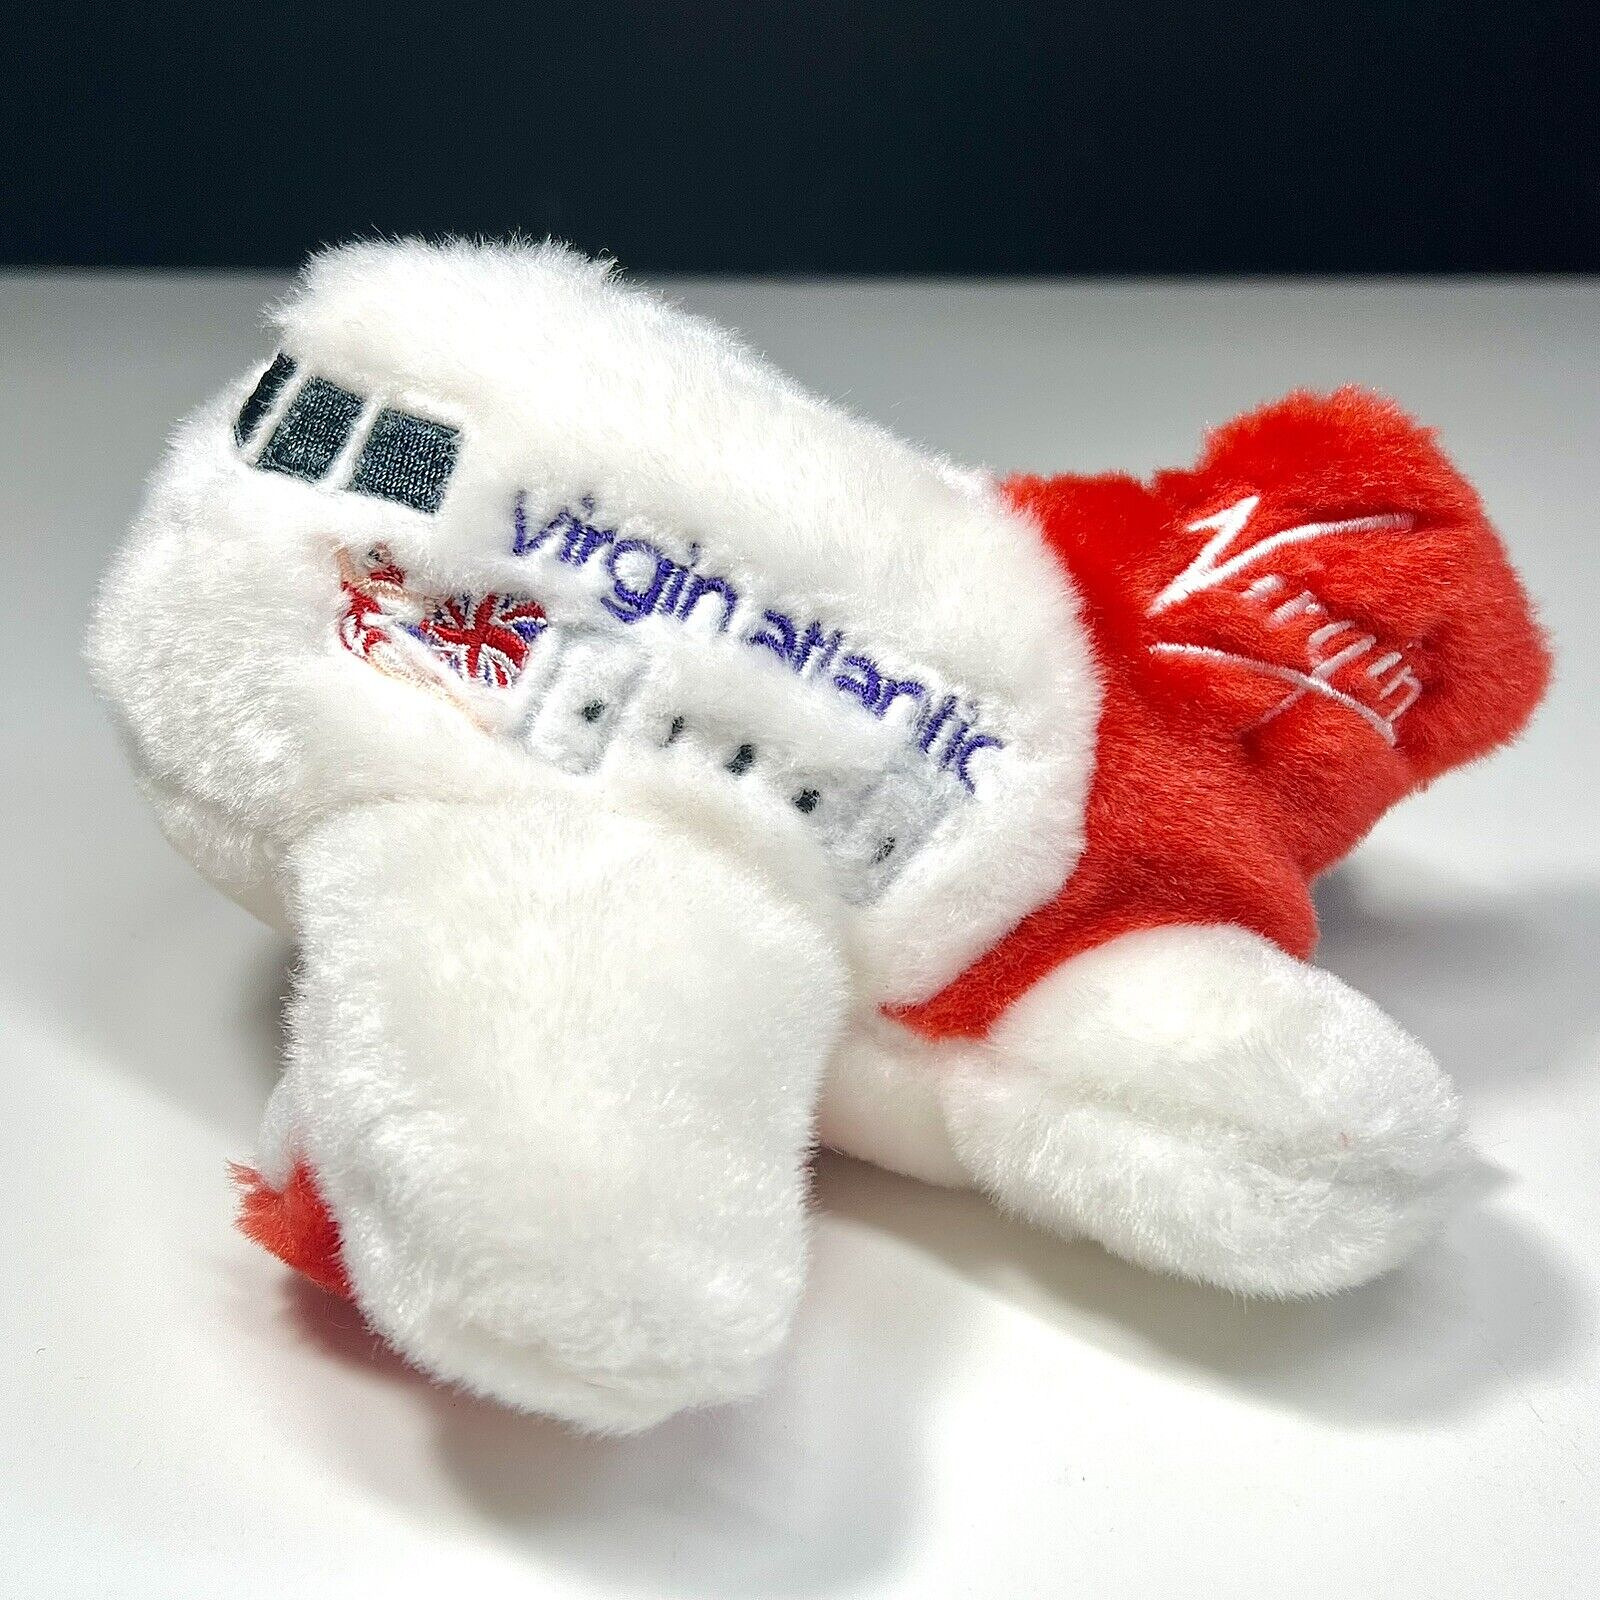 Virgin Atlantic 747 Soft Plush Airplane Stuffed Animal Toy Virgin Airlines